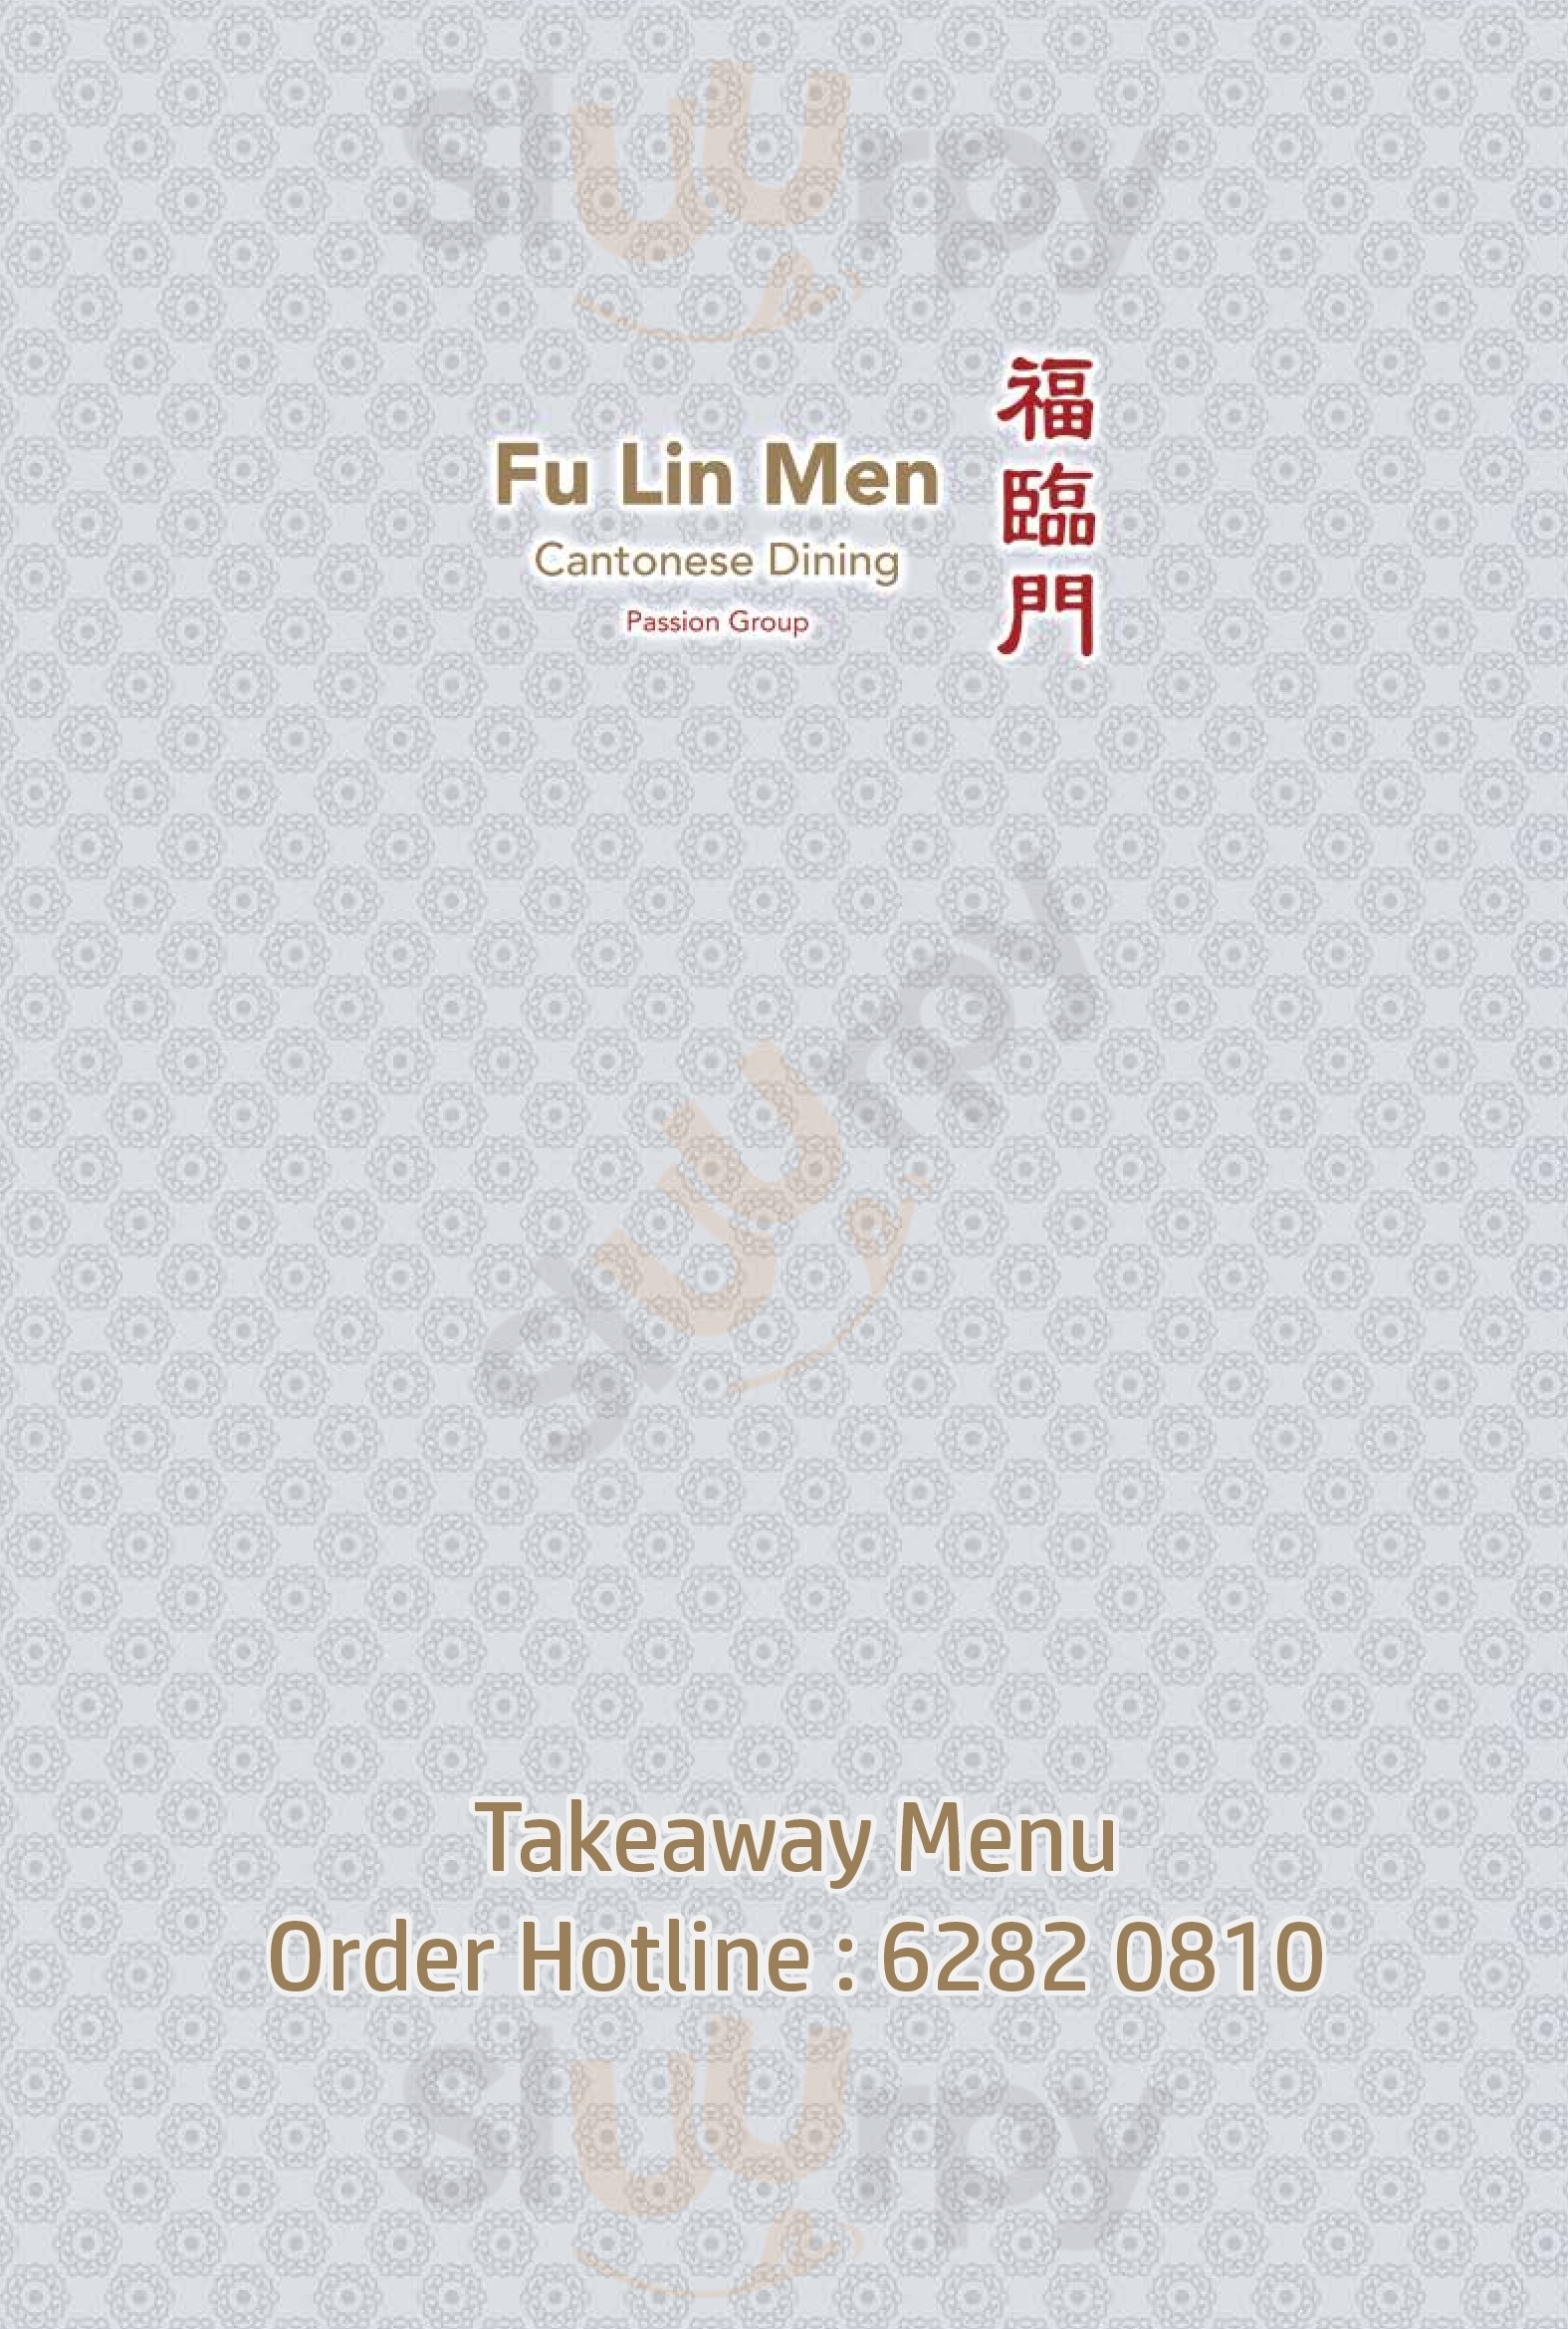 Fu Lin Men Cantonese Dining Singapore Menu - 1